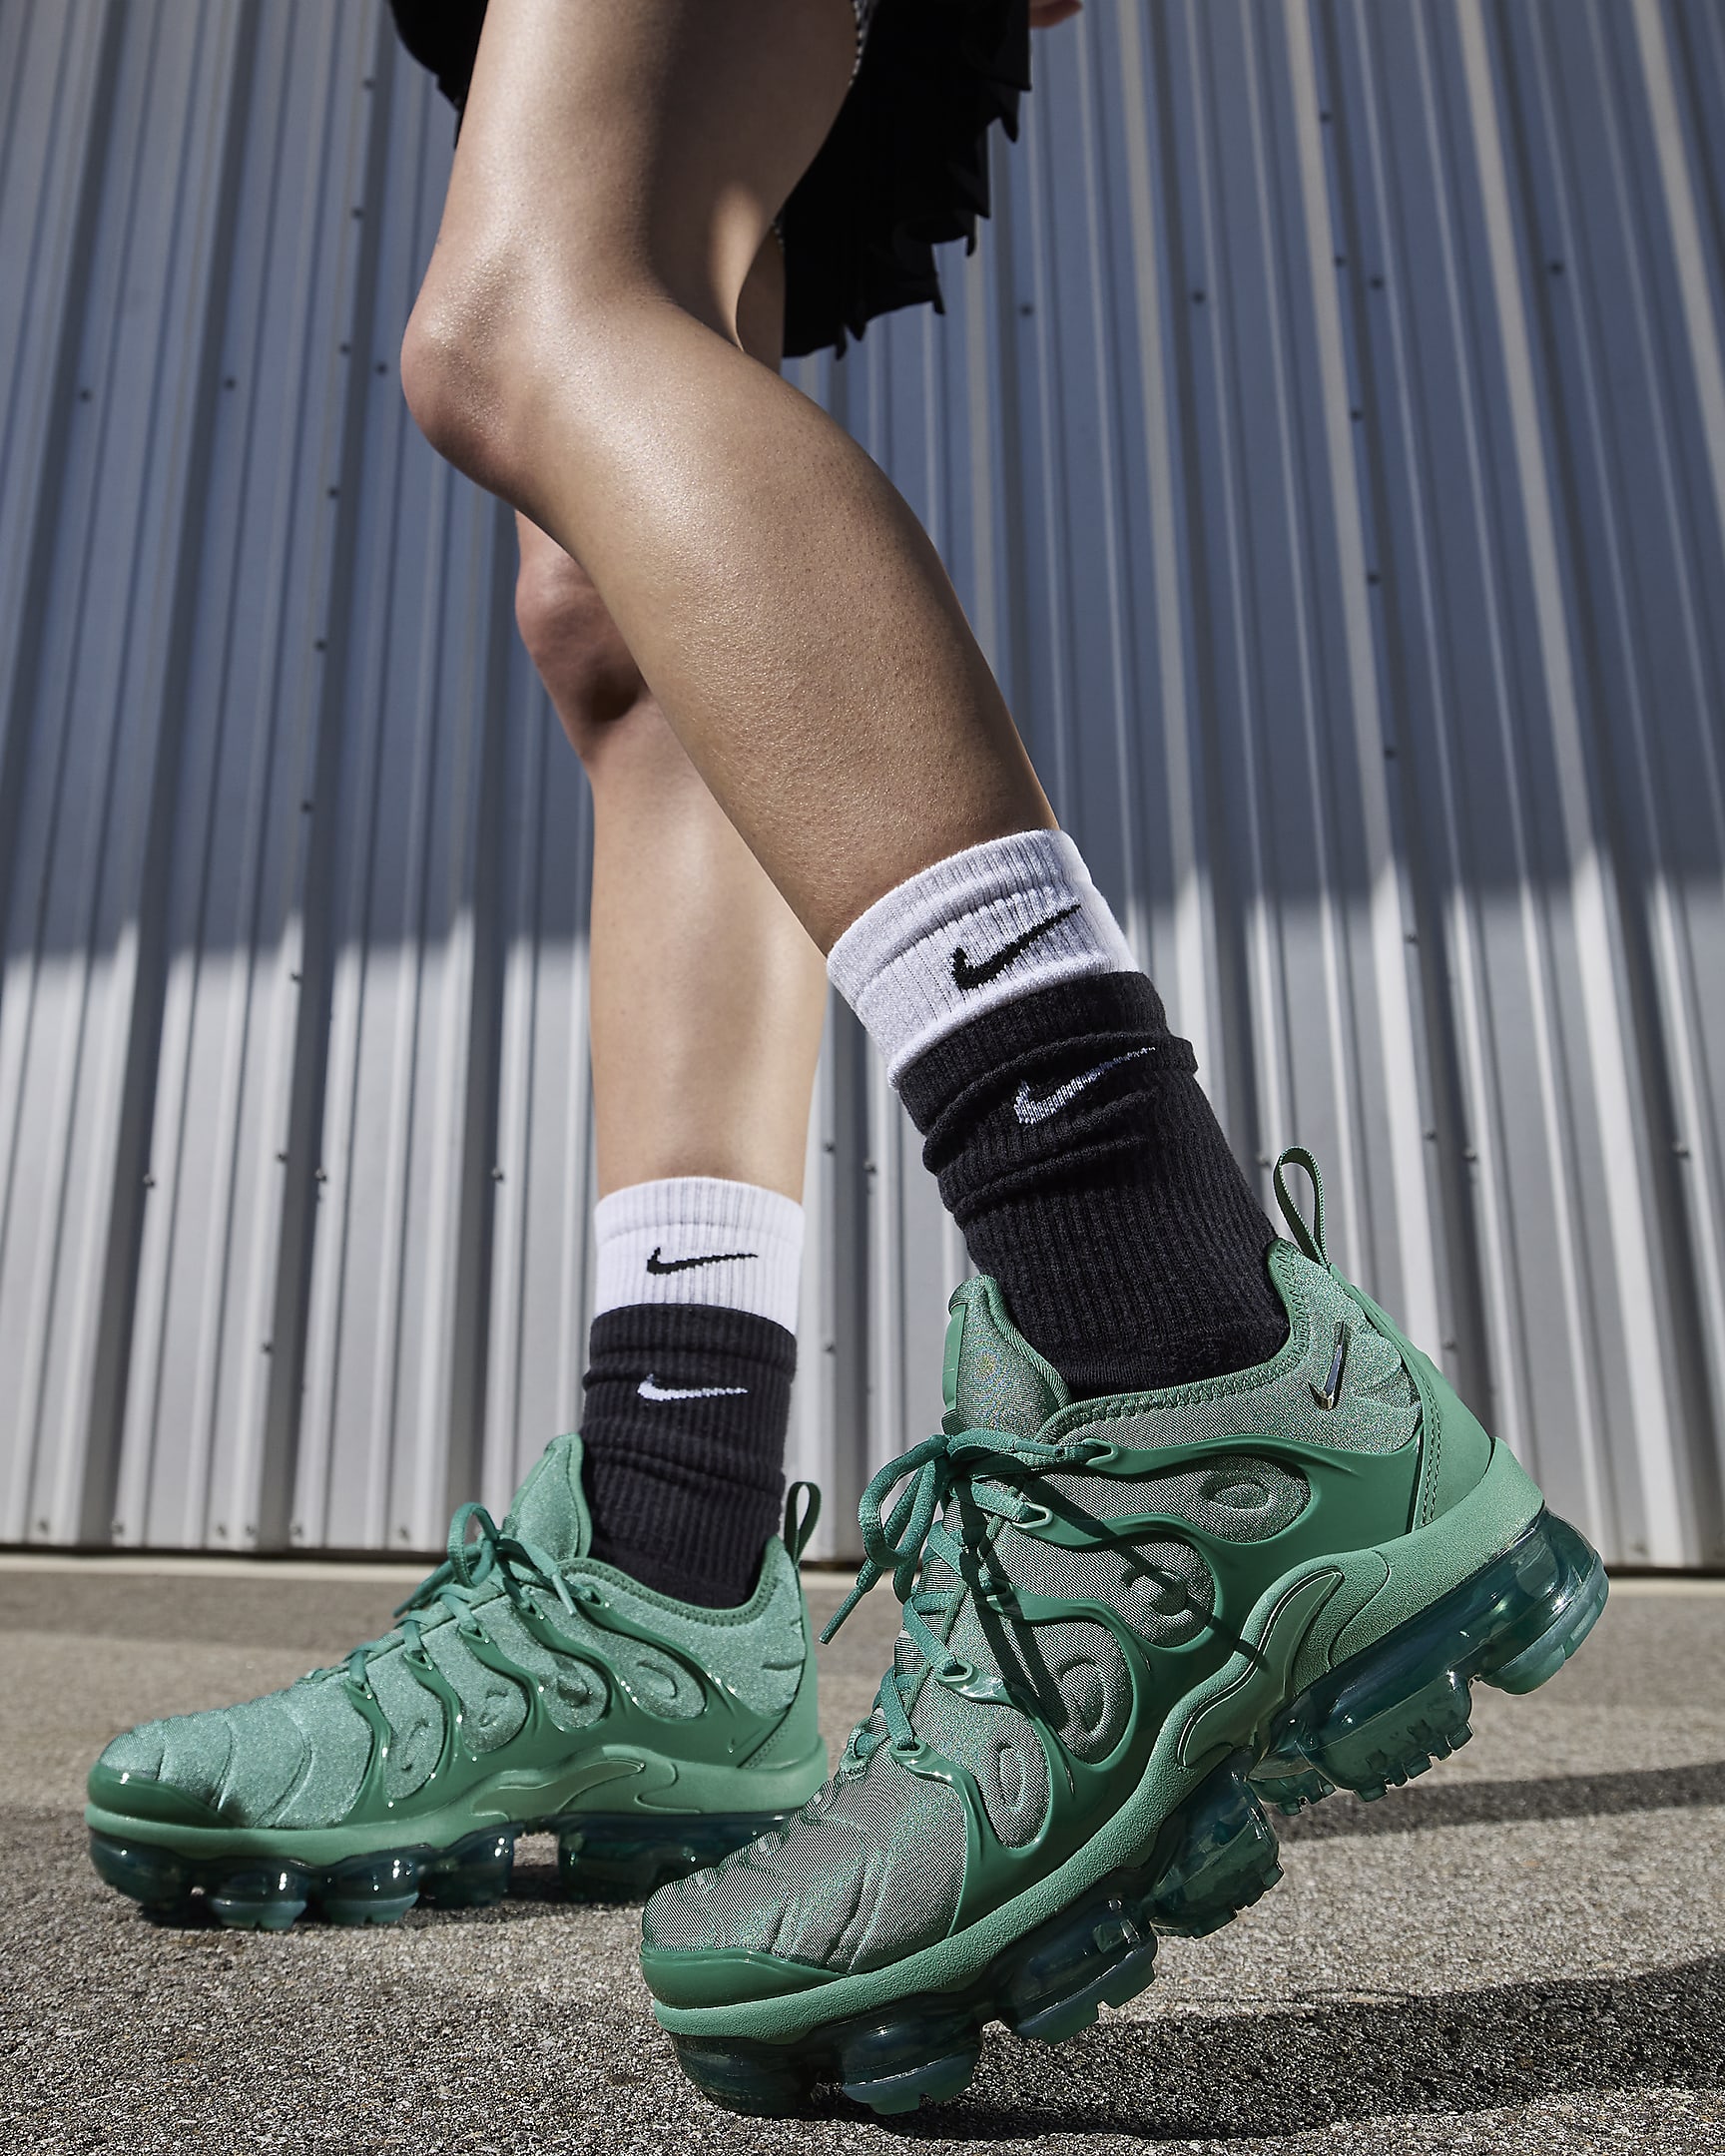 Nike Air VaporMax Plus Women's Shoes - Bicoastal/Metallic Silver/Chrome